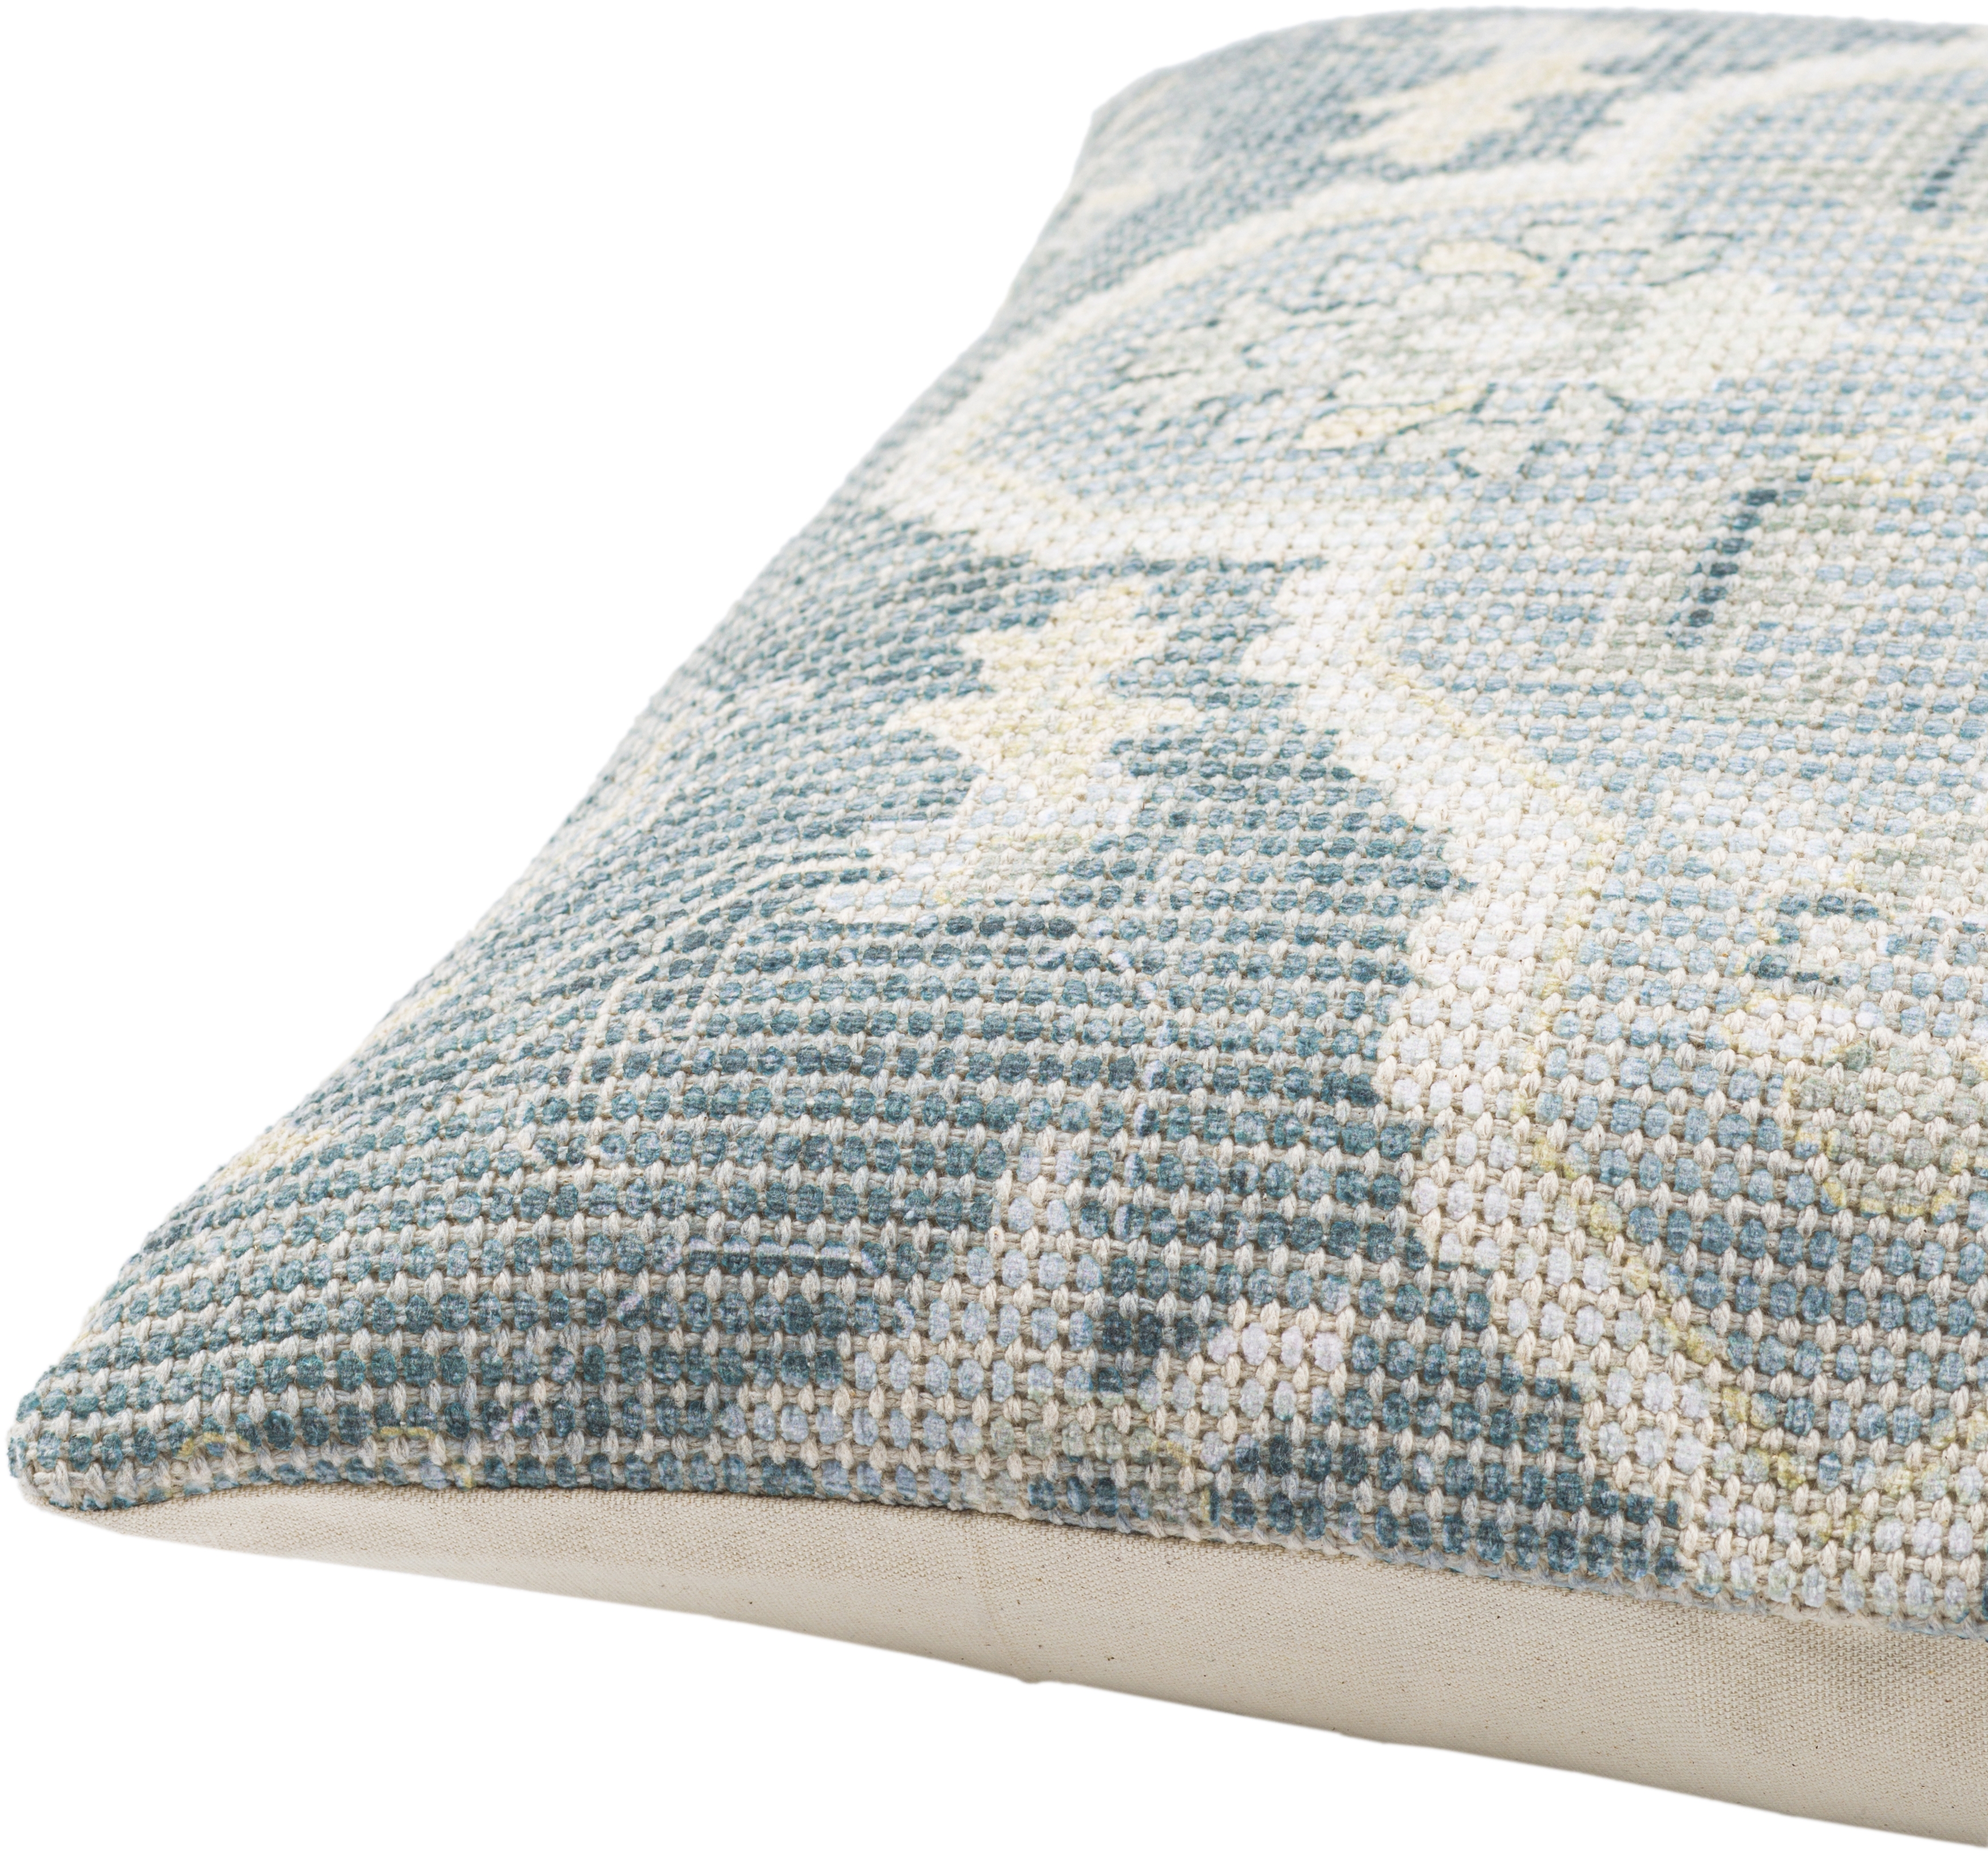 Samsun Throw Pillow, Medium, with poly insert - Image 2